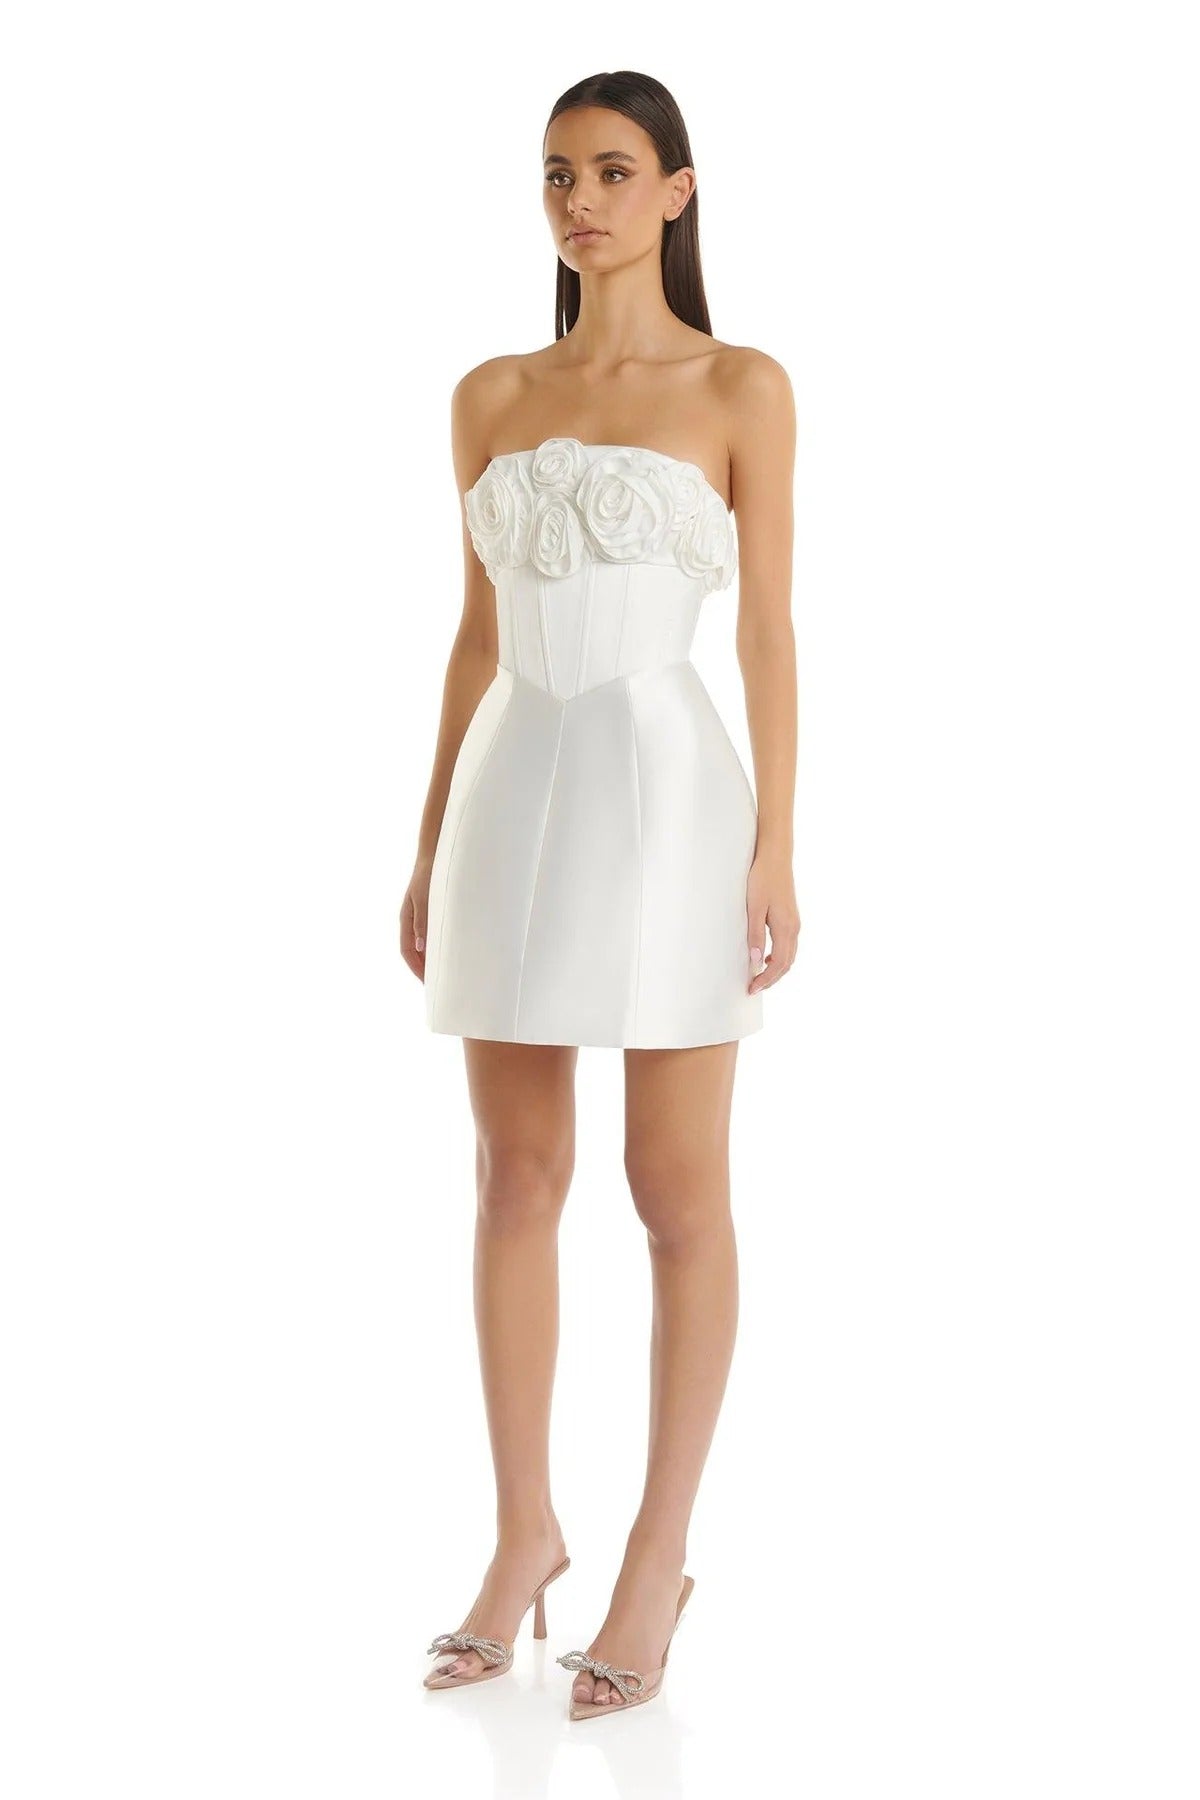 Tehanni Dress - White - SHOPJAUS - JAUS